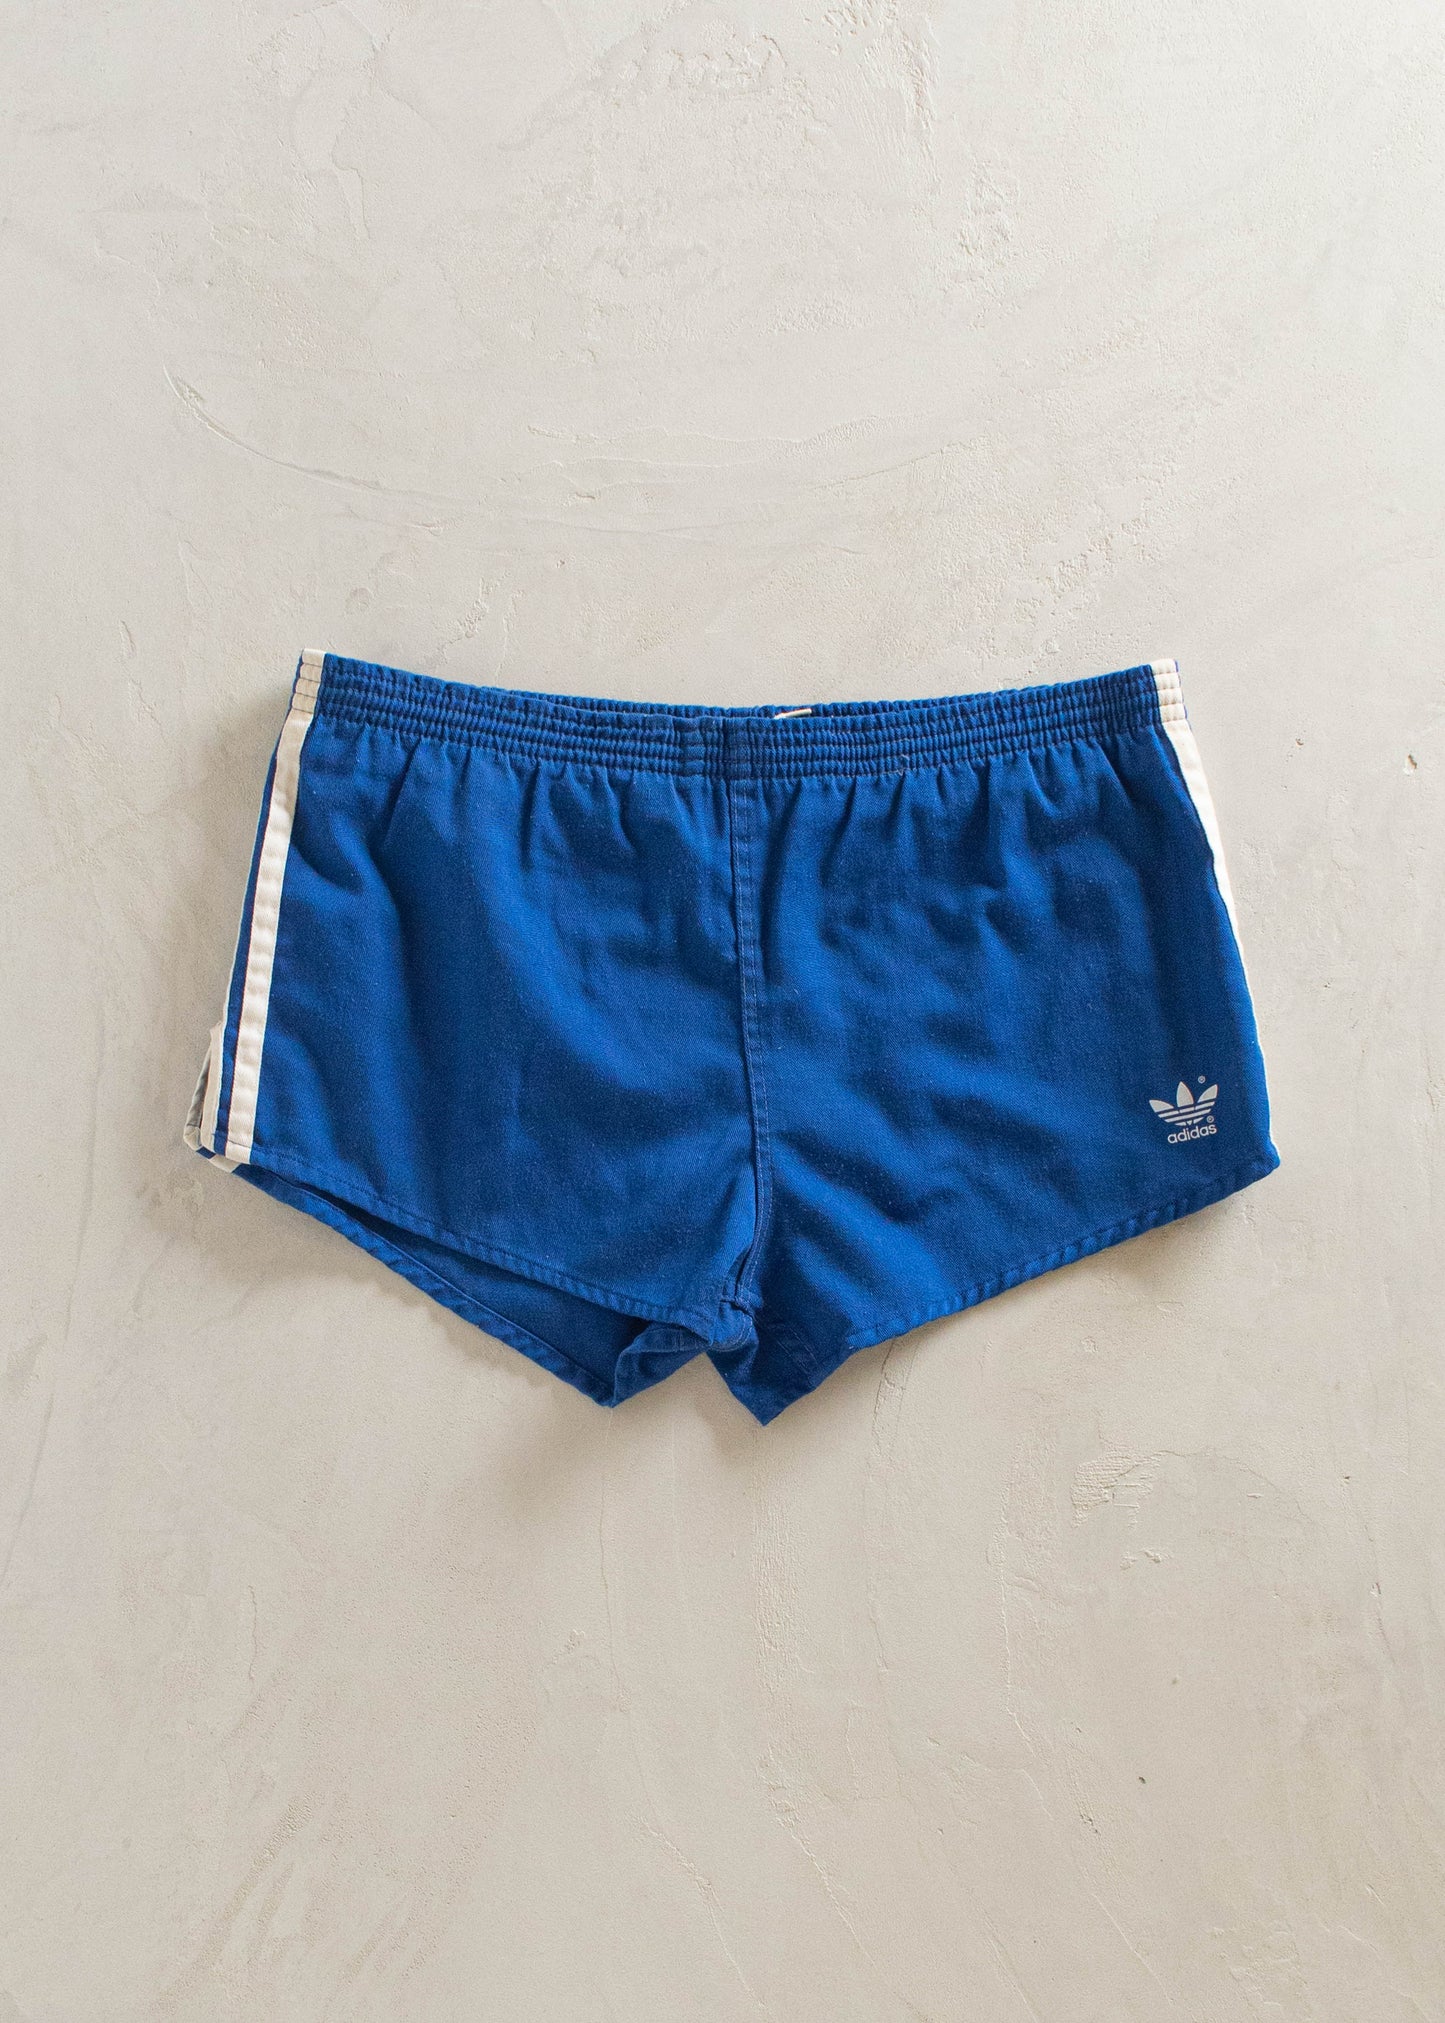 1970s Adidas Athletic Shorts Size M/L